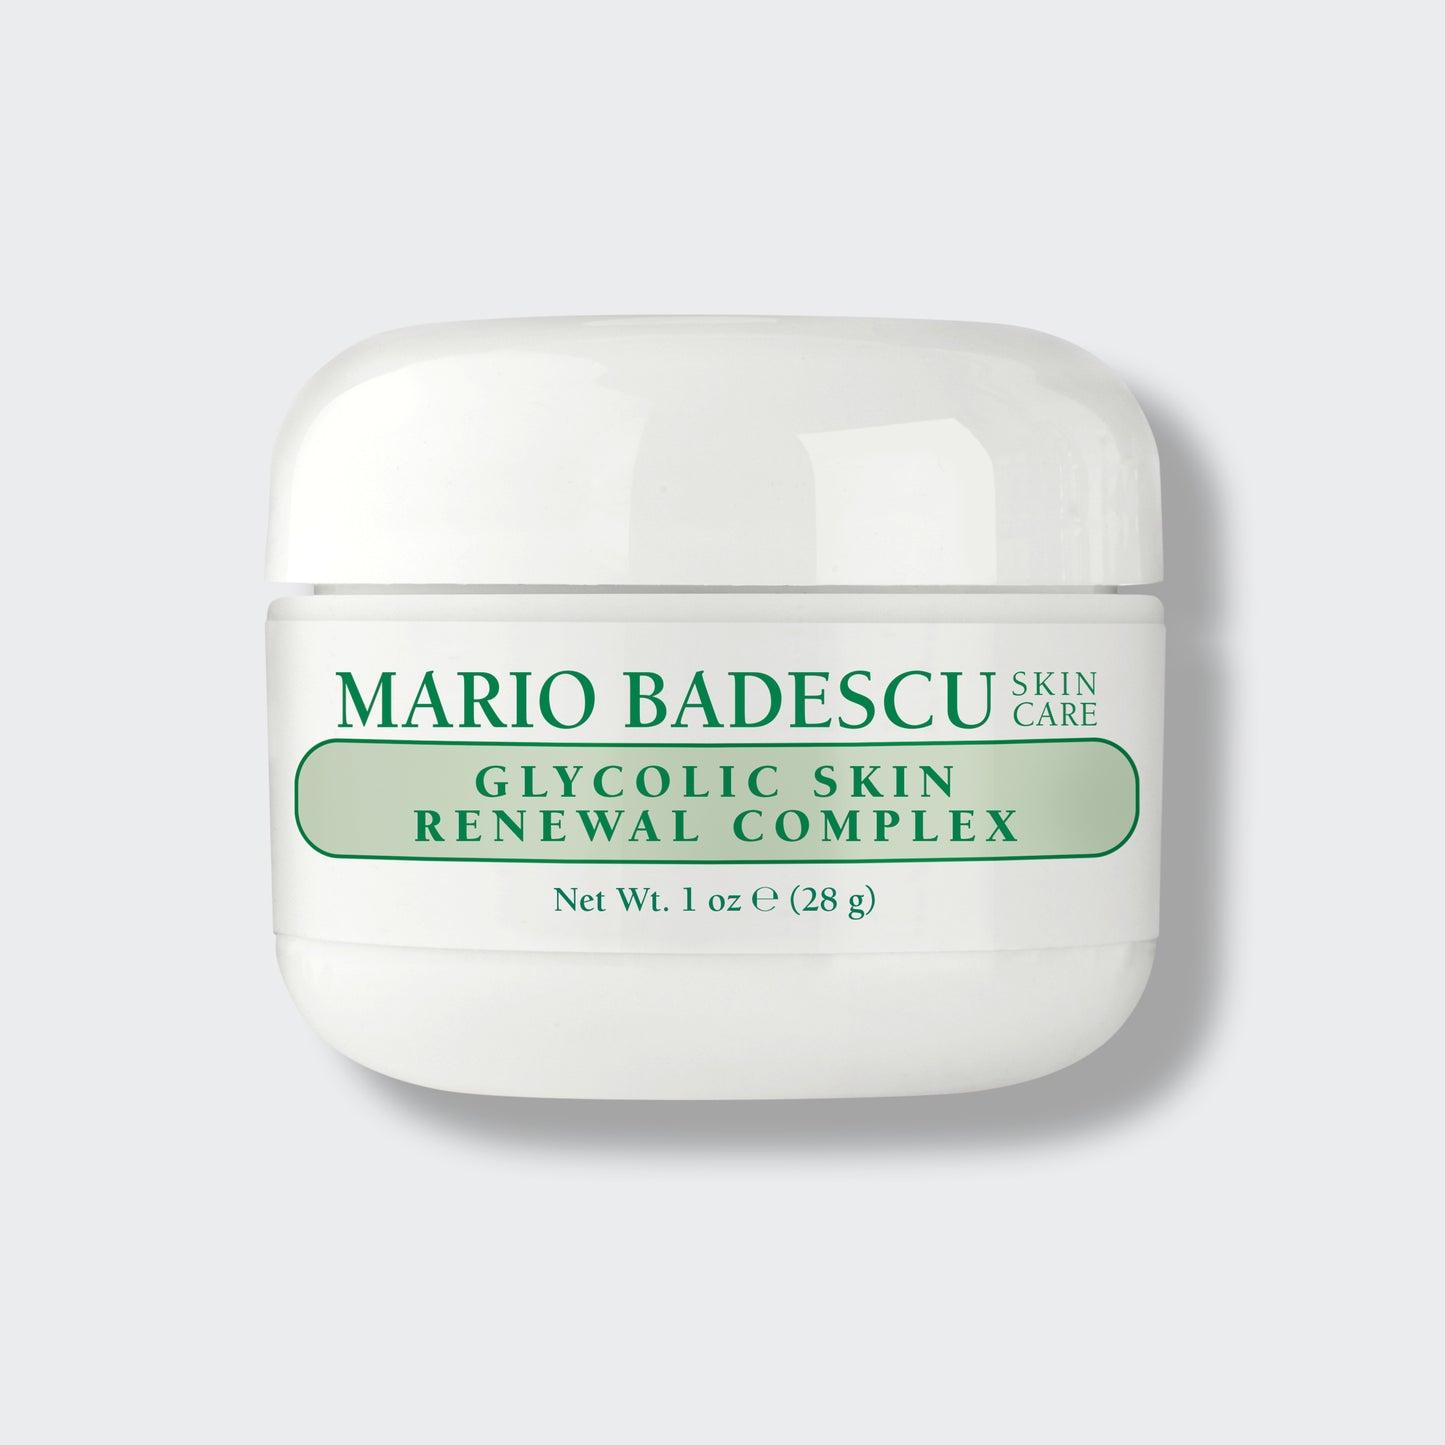  Mario Badescu Glycolic Skin Renewal Complex